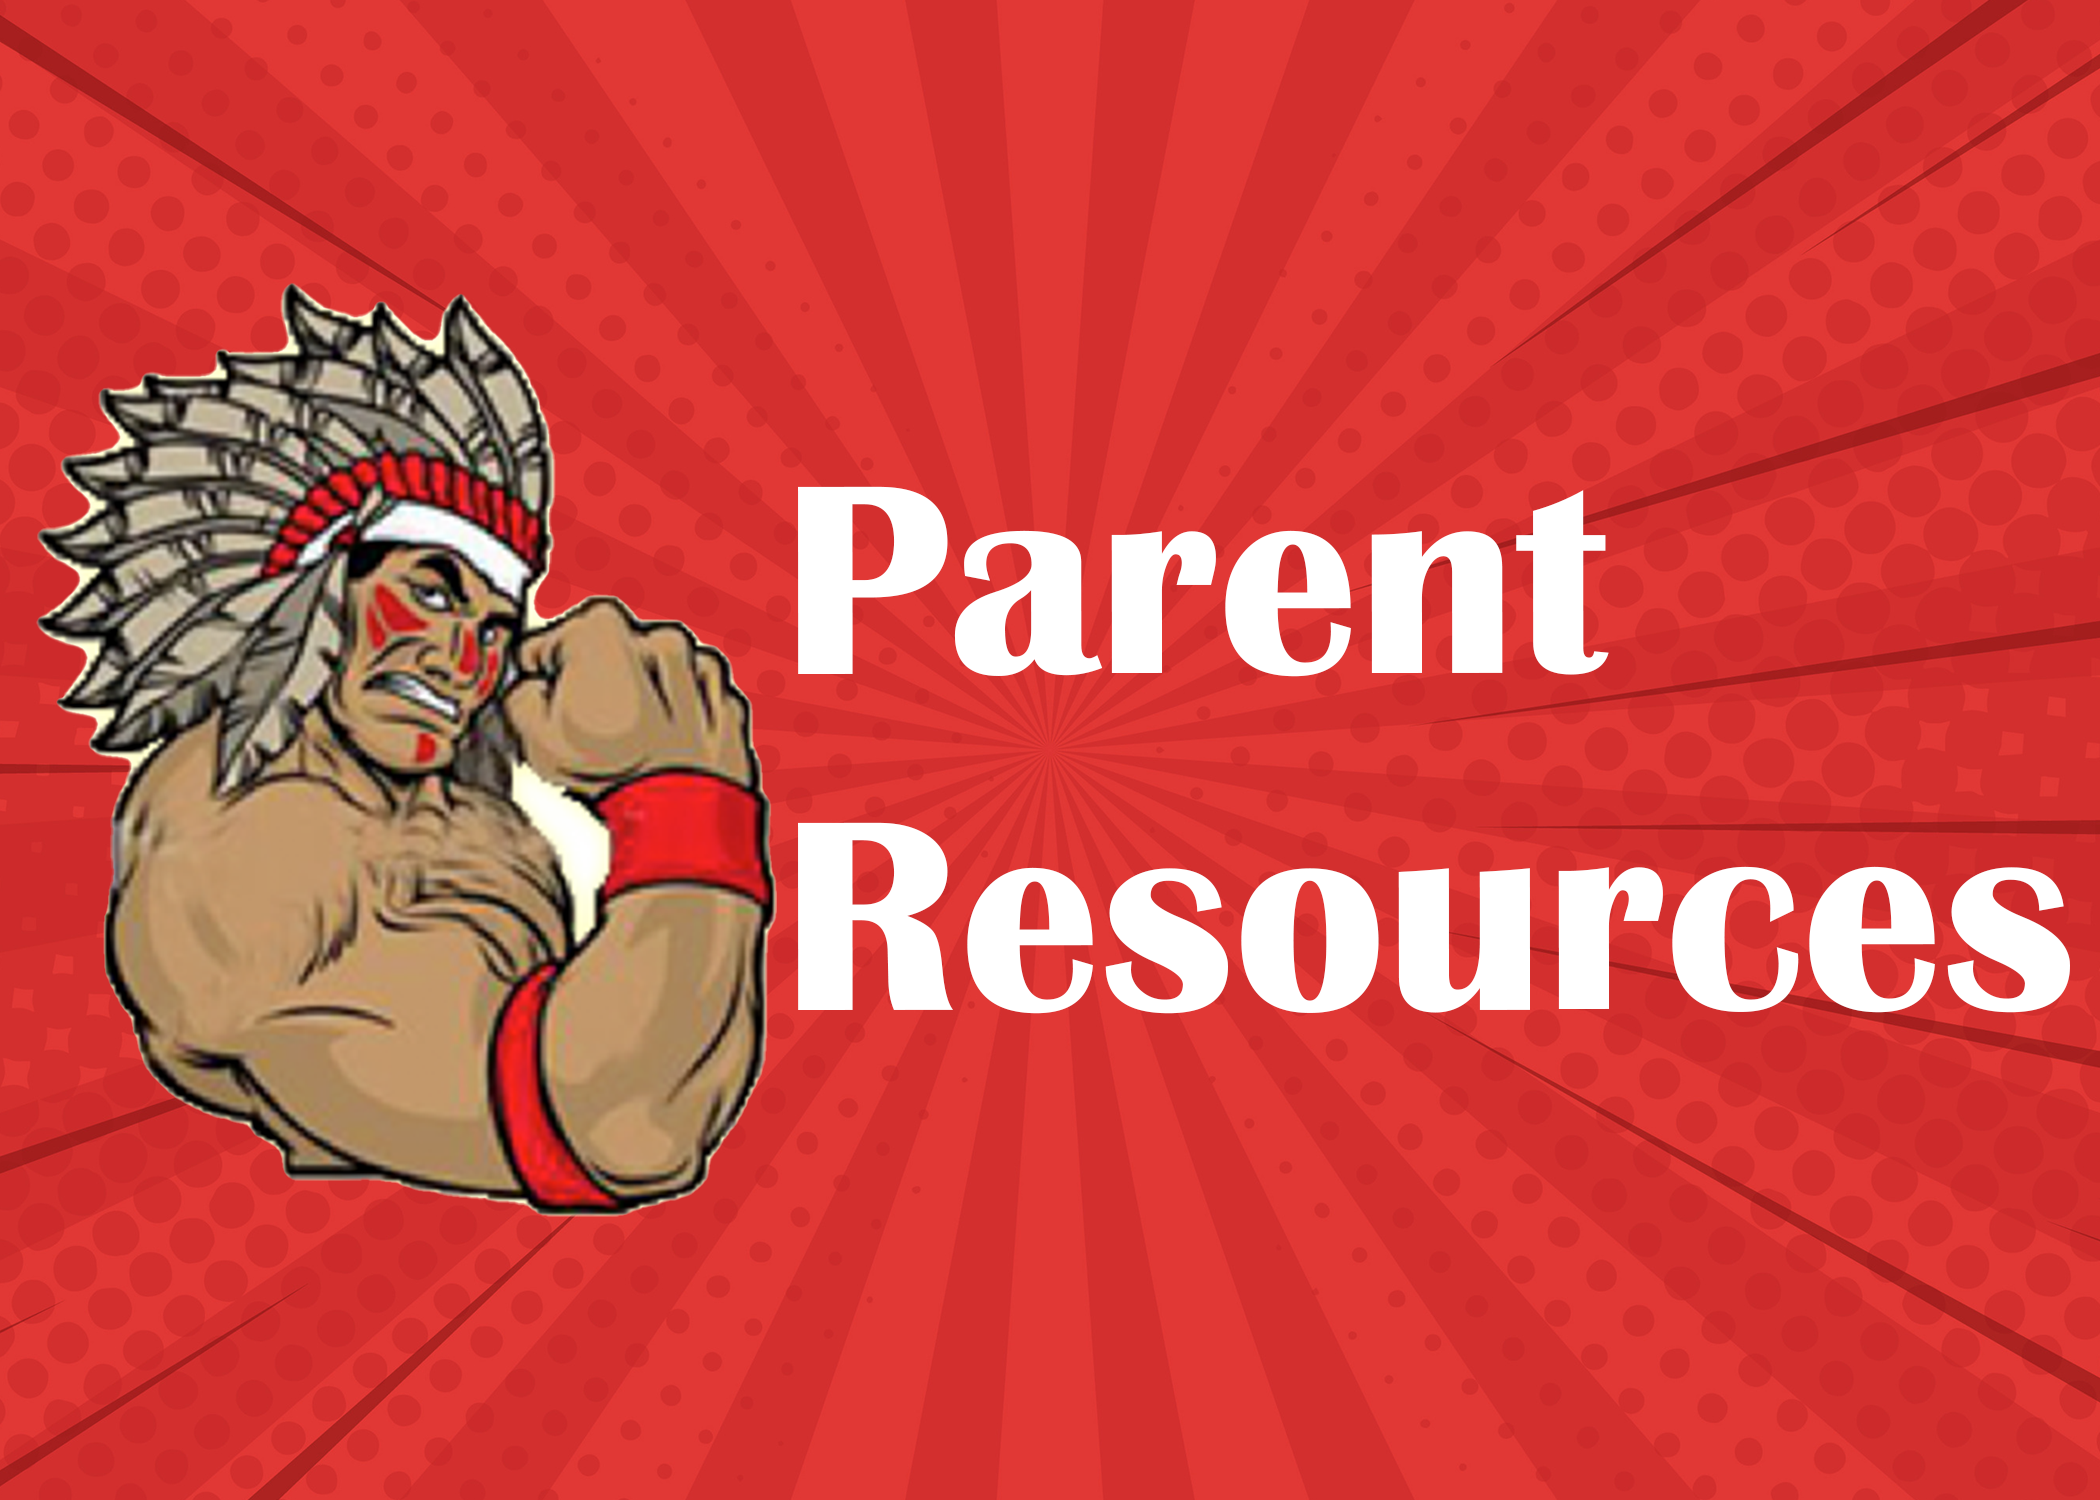 parent resources image